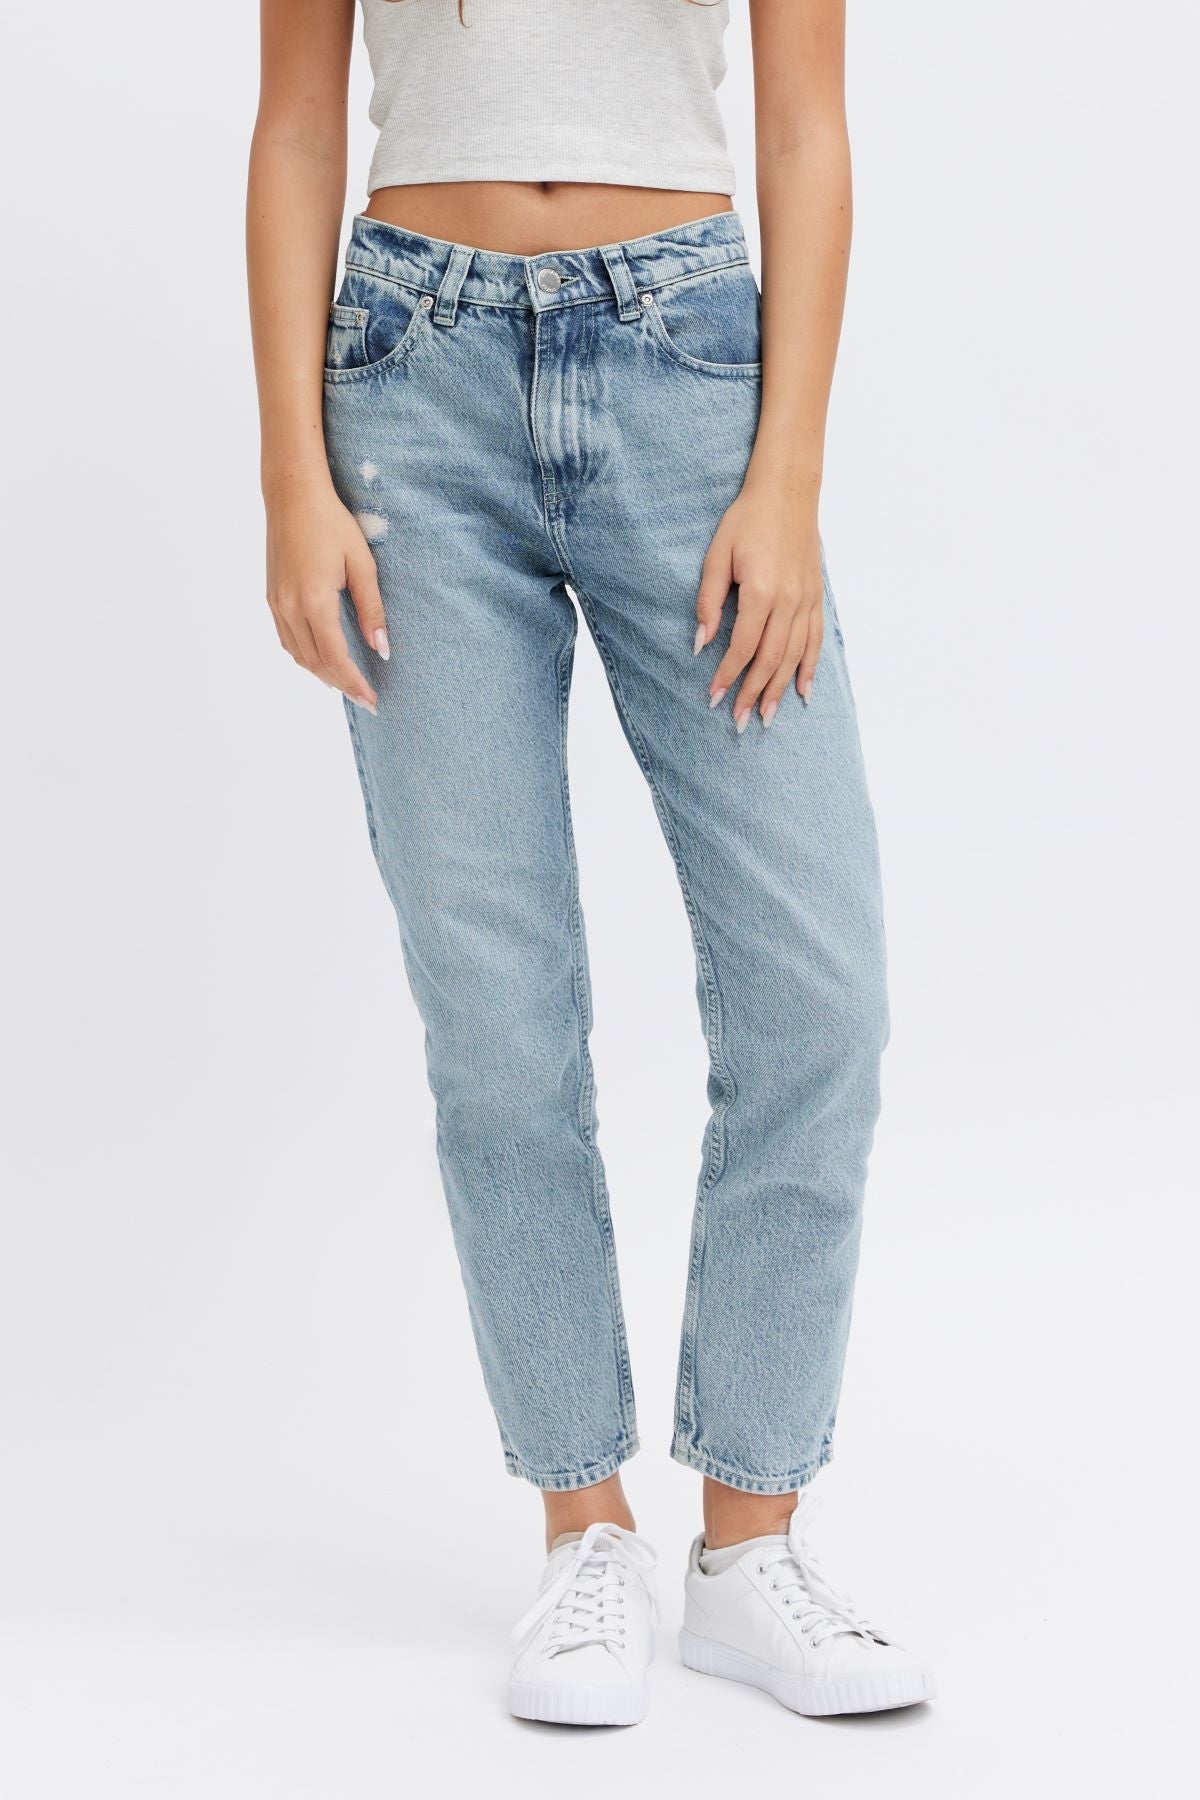 organic women's jeans